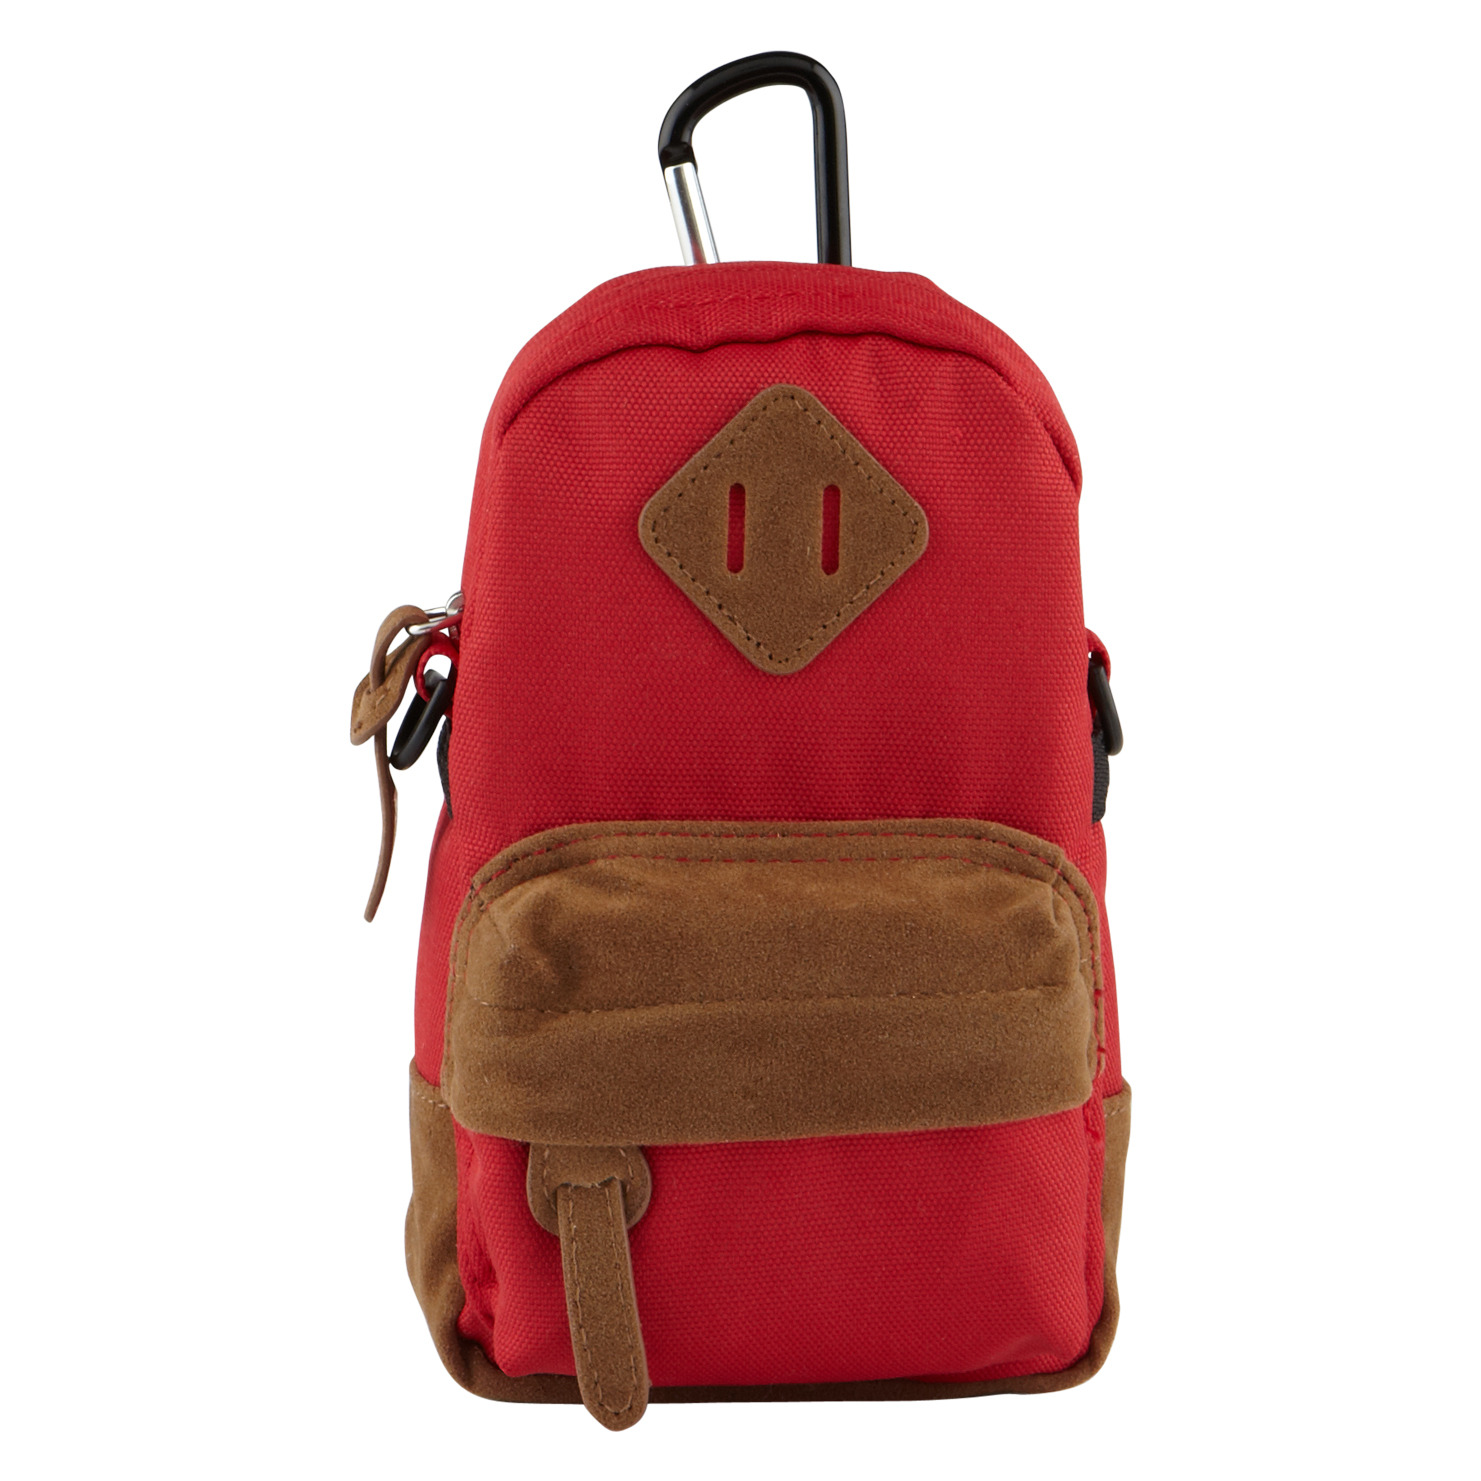 ALDO Entity Bag in Red for Men - Lyst